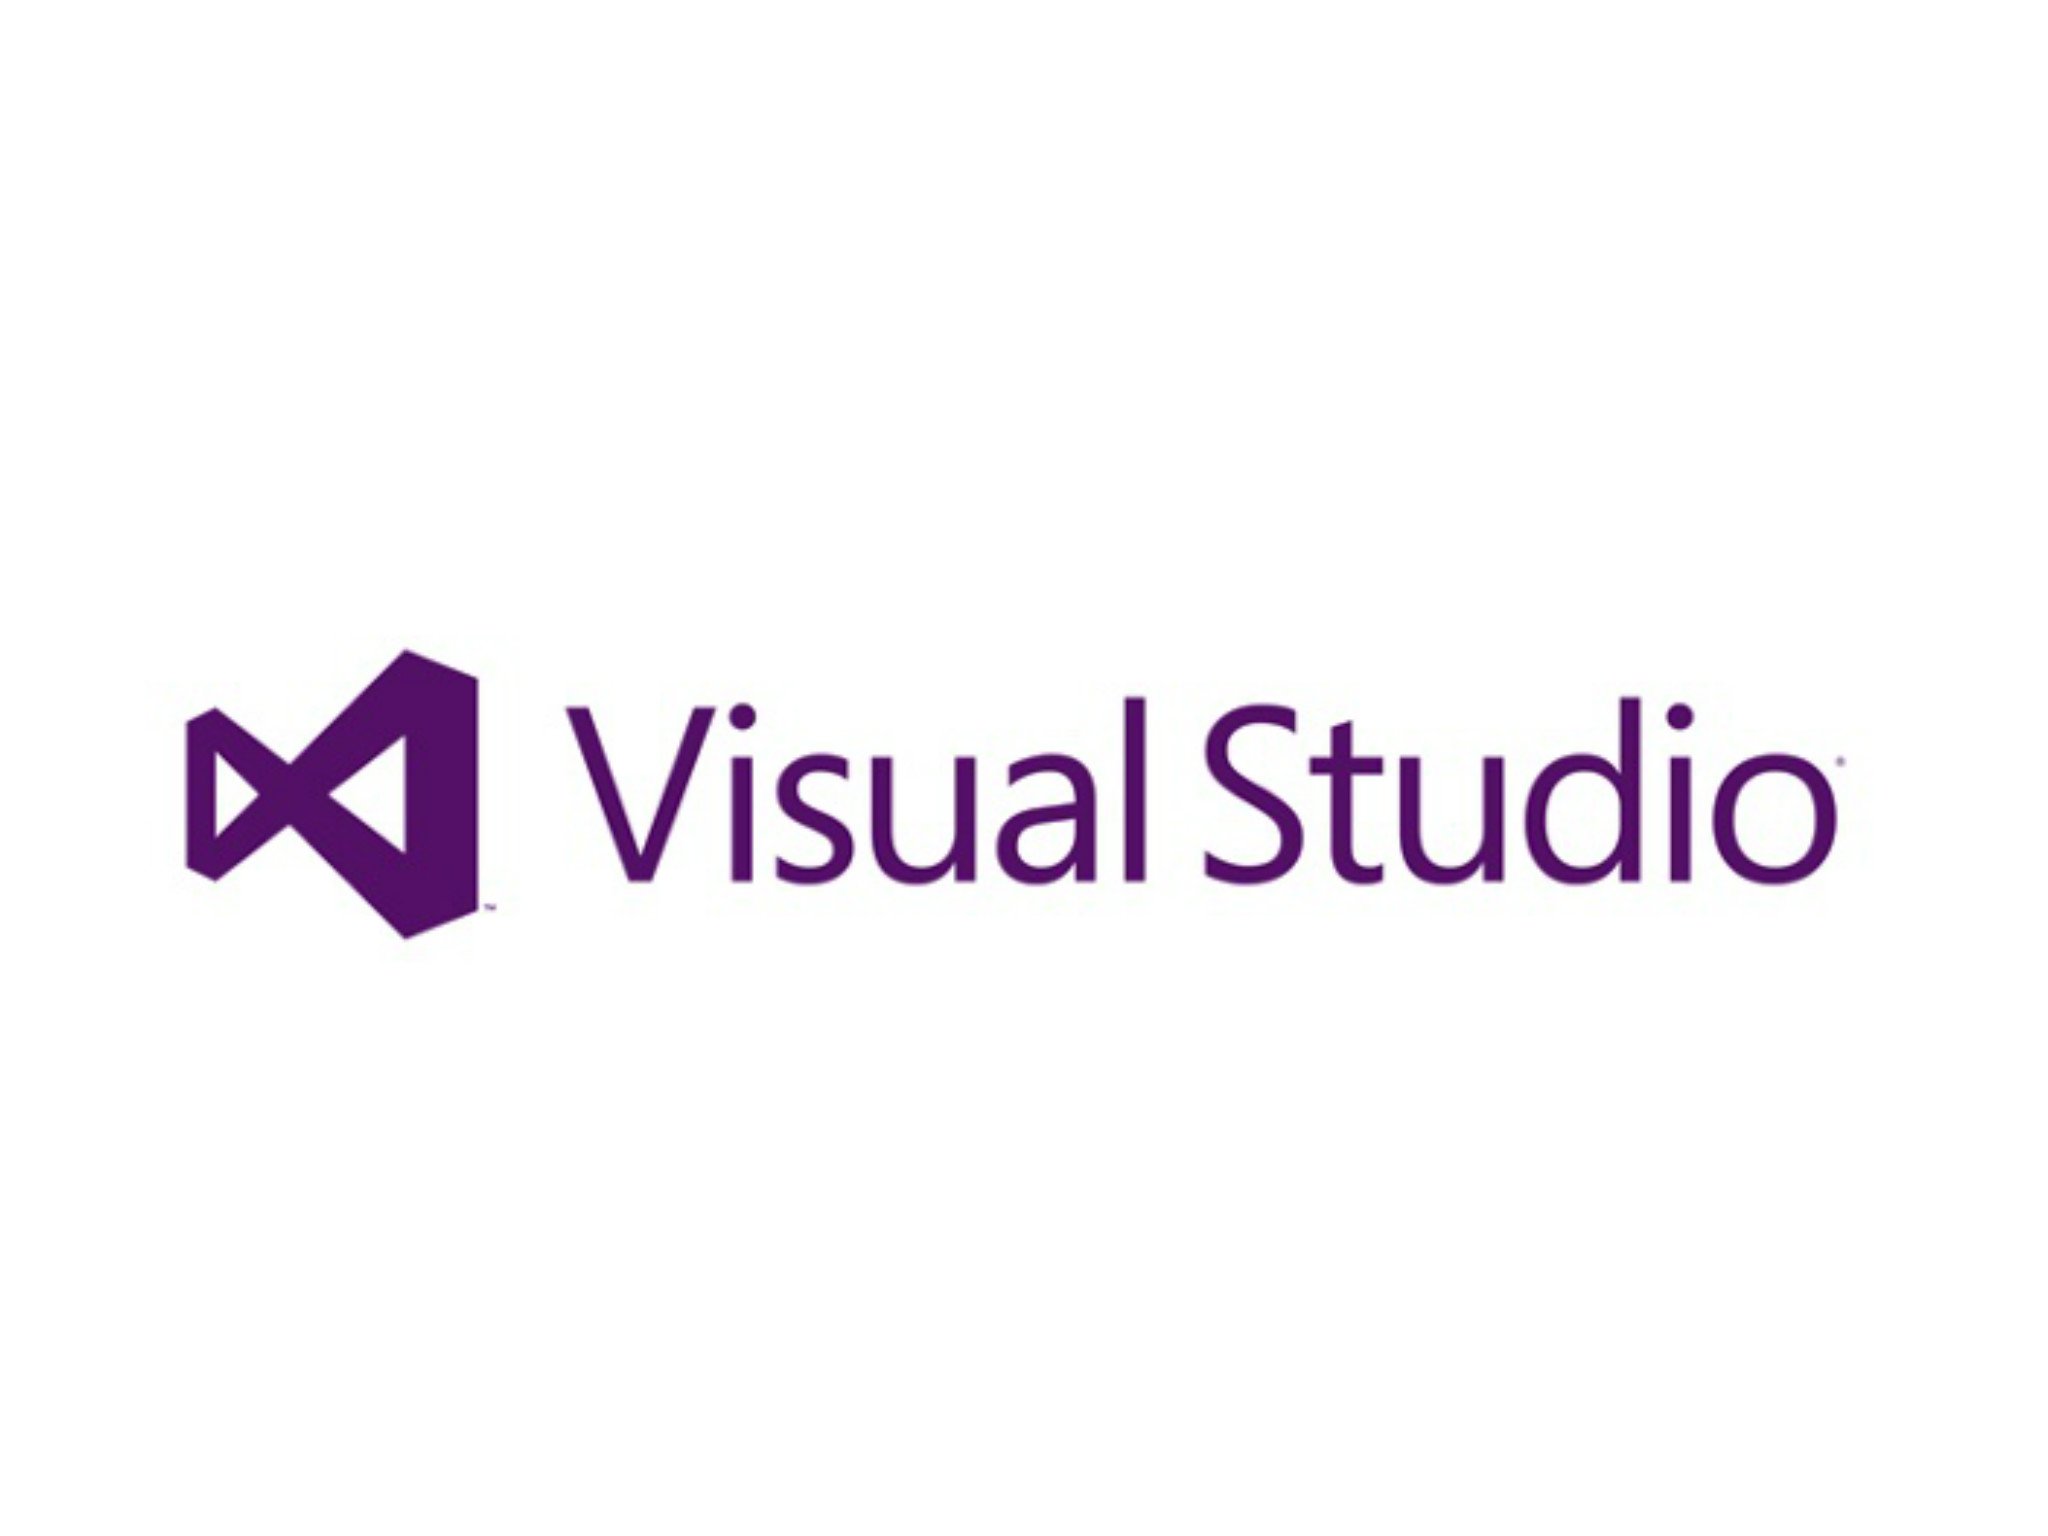 Visual Studio 2019 is the next version of Microsoft's developer tool